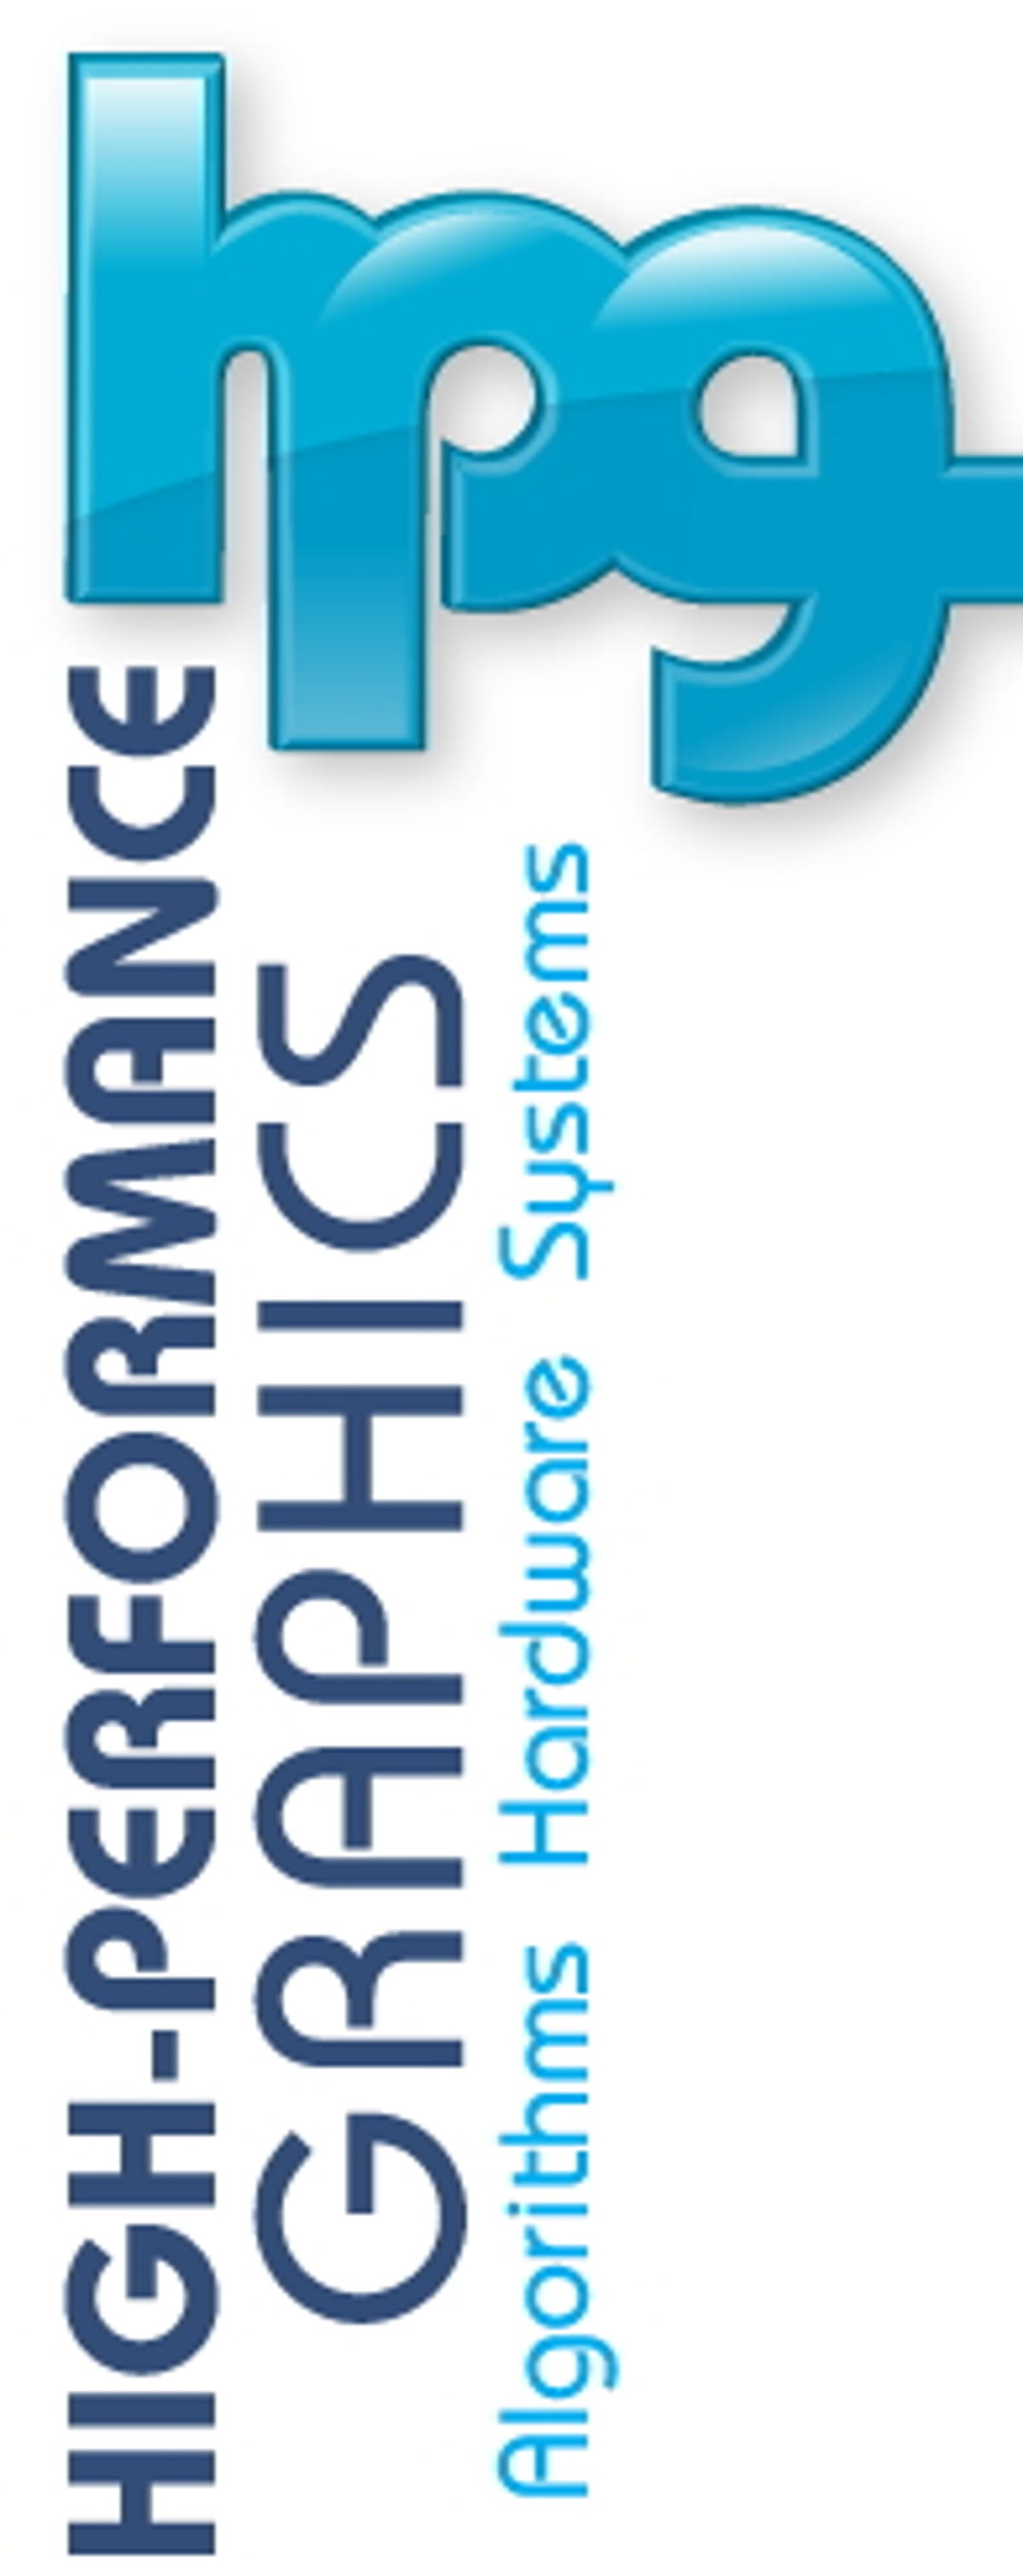 HPG 2009 logo